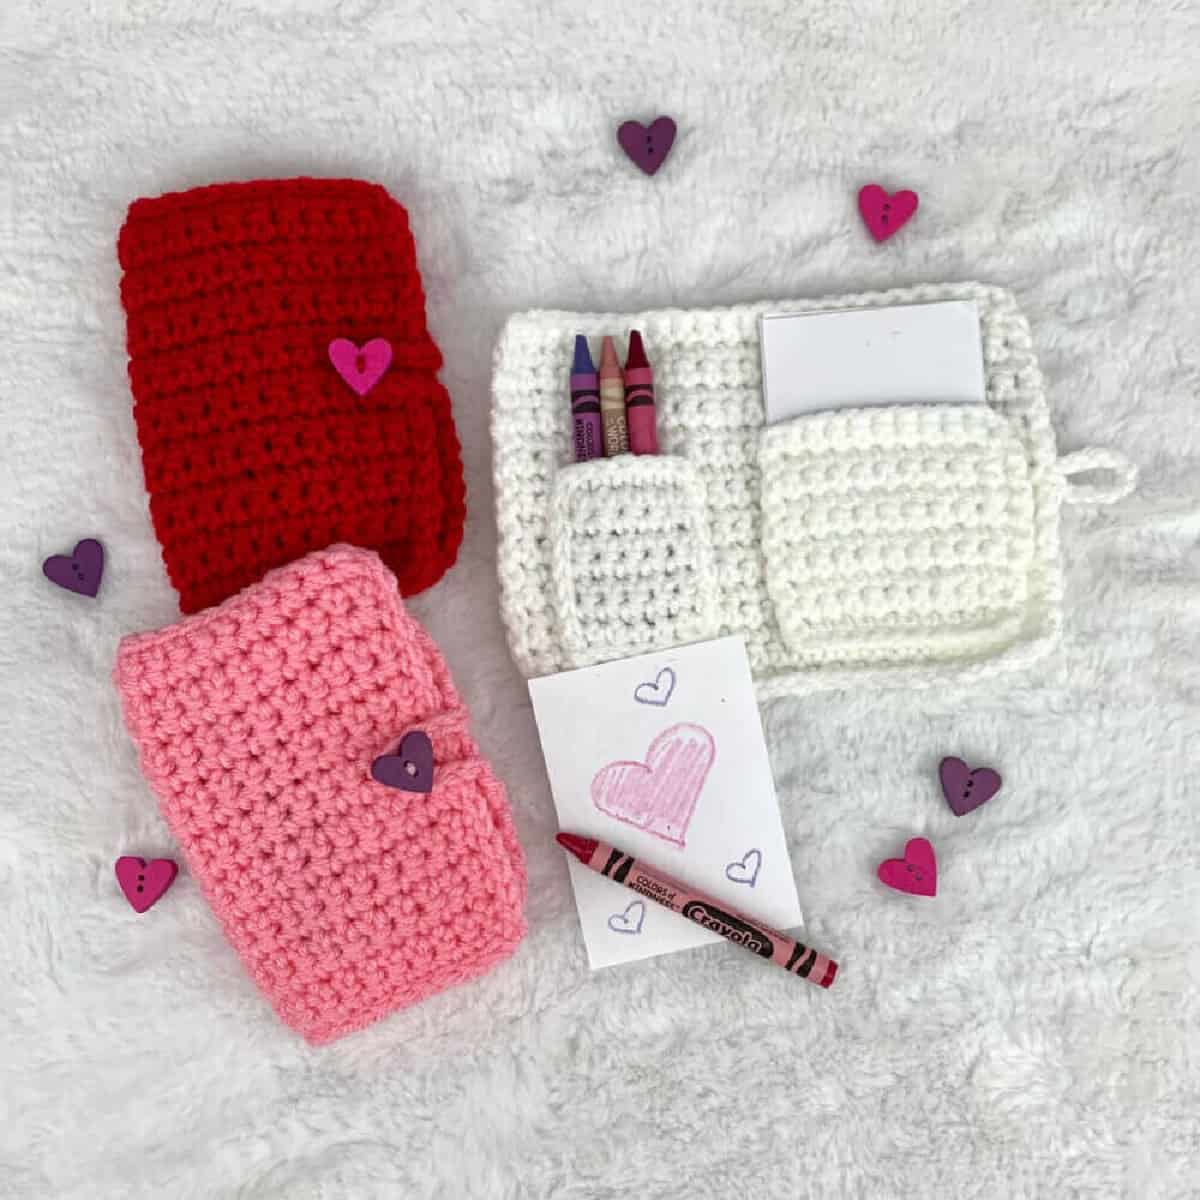 Crochet Valentine's Love Notes.